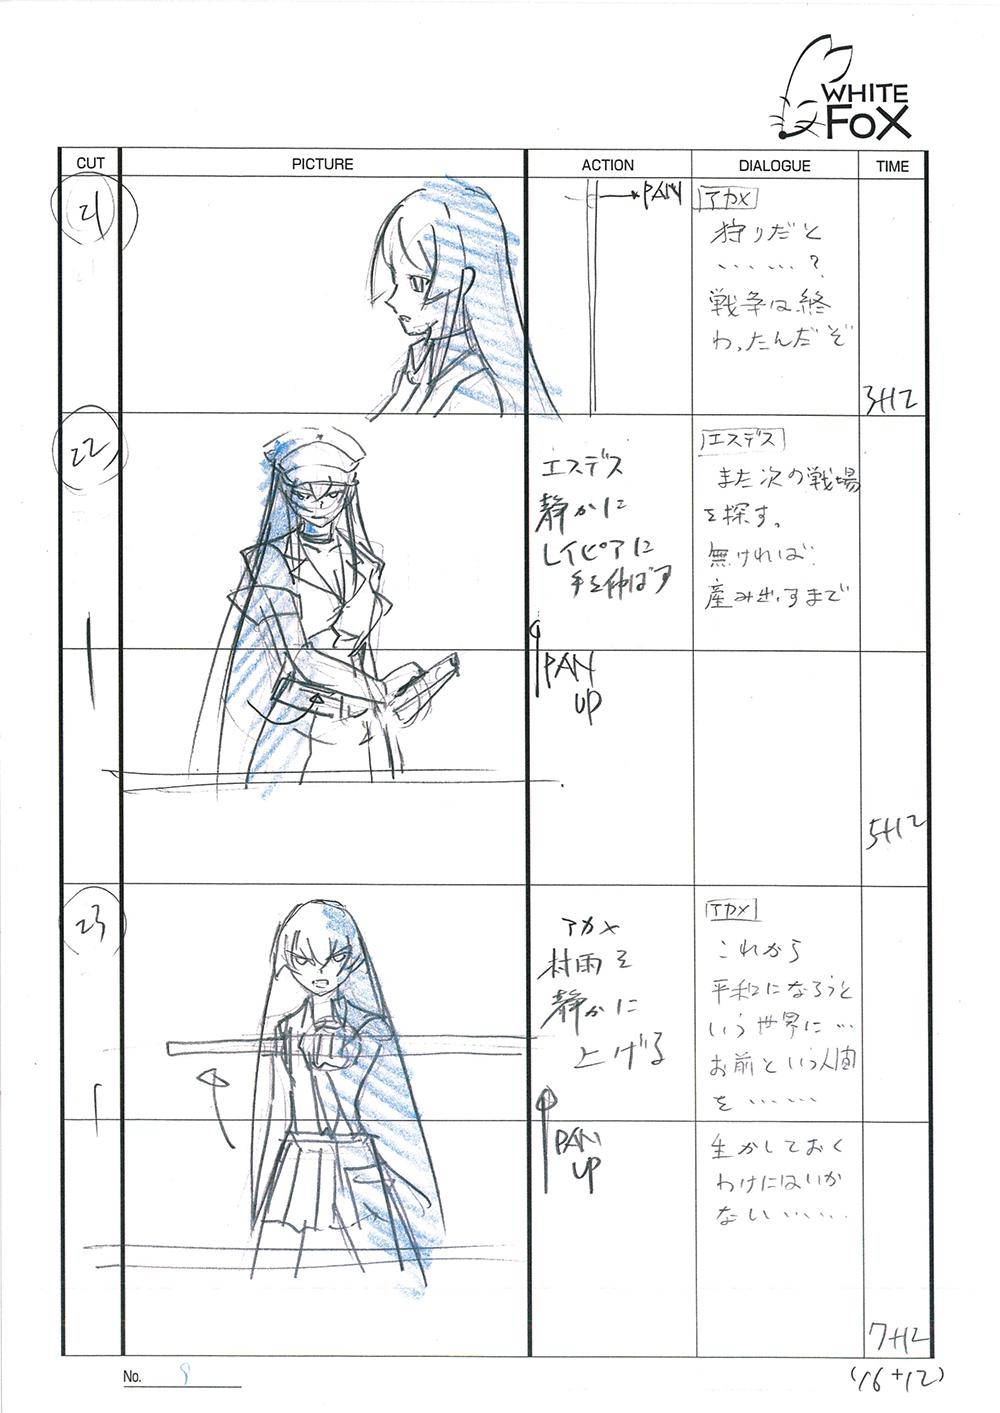 Akame ga Kill Episode 24 Storyboard Leak 011